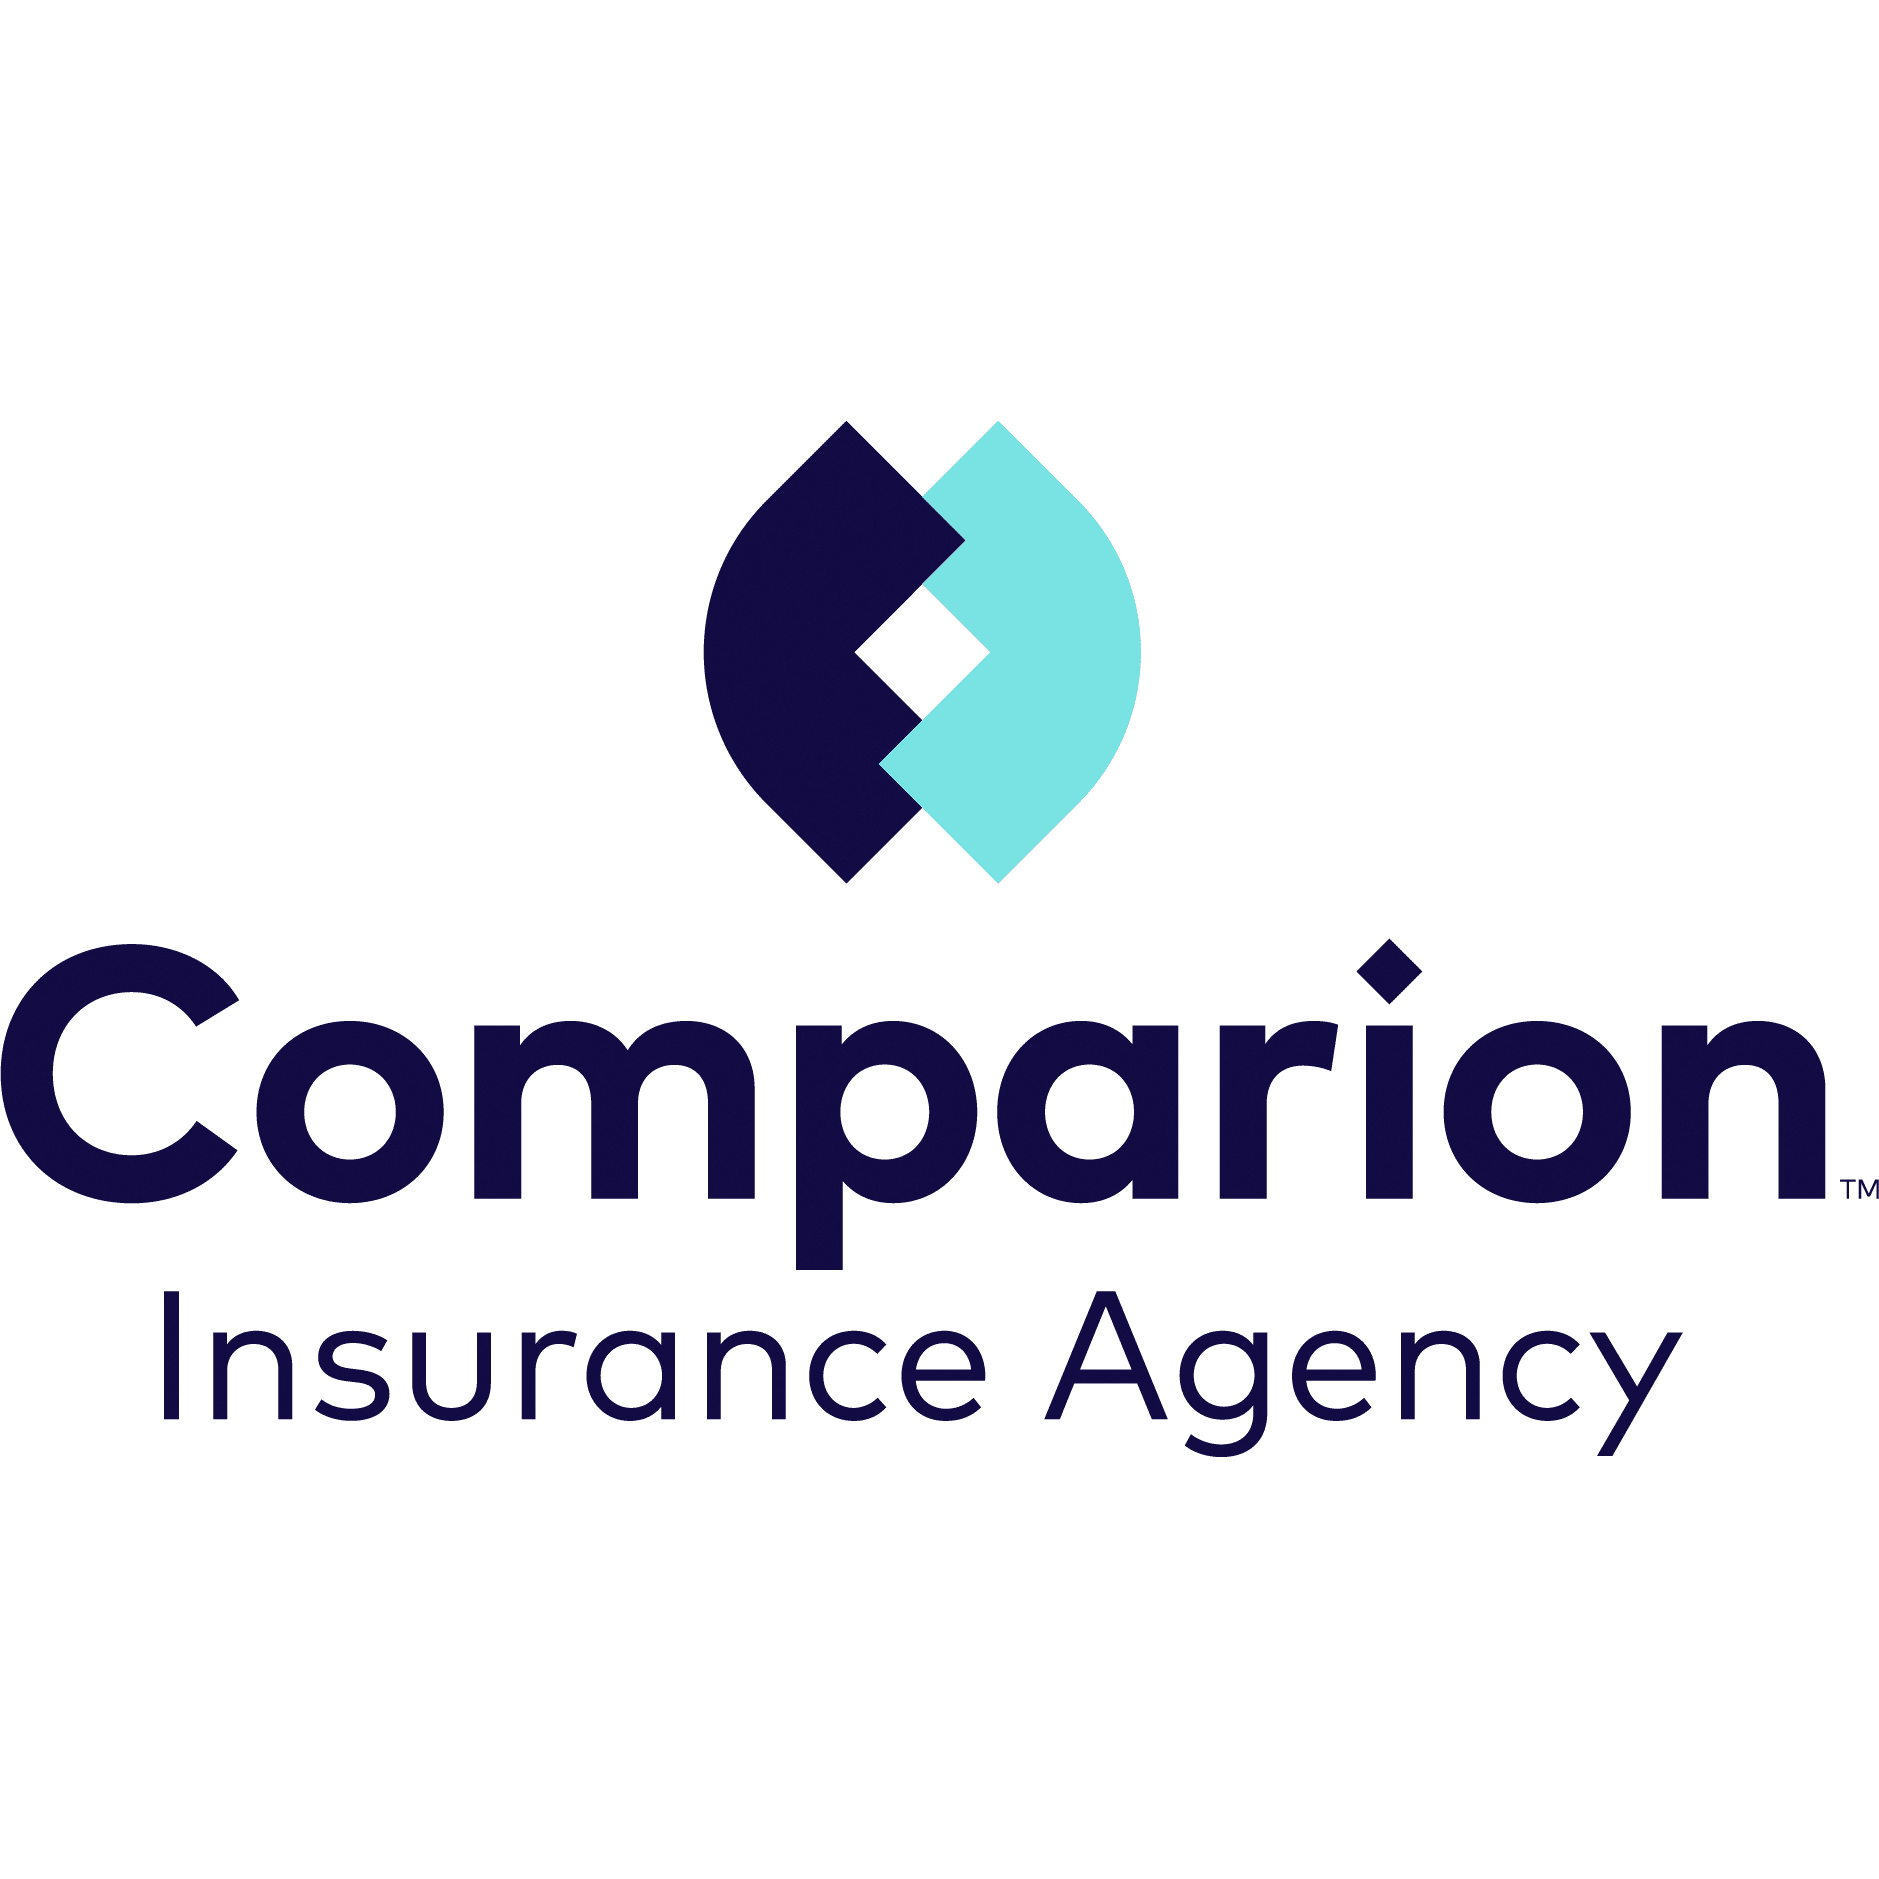 Paul Roberti at Comparion Insurance Agency